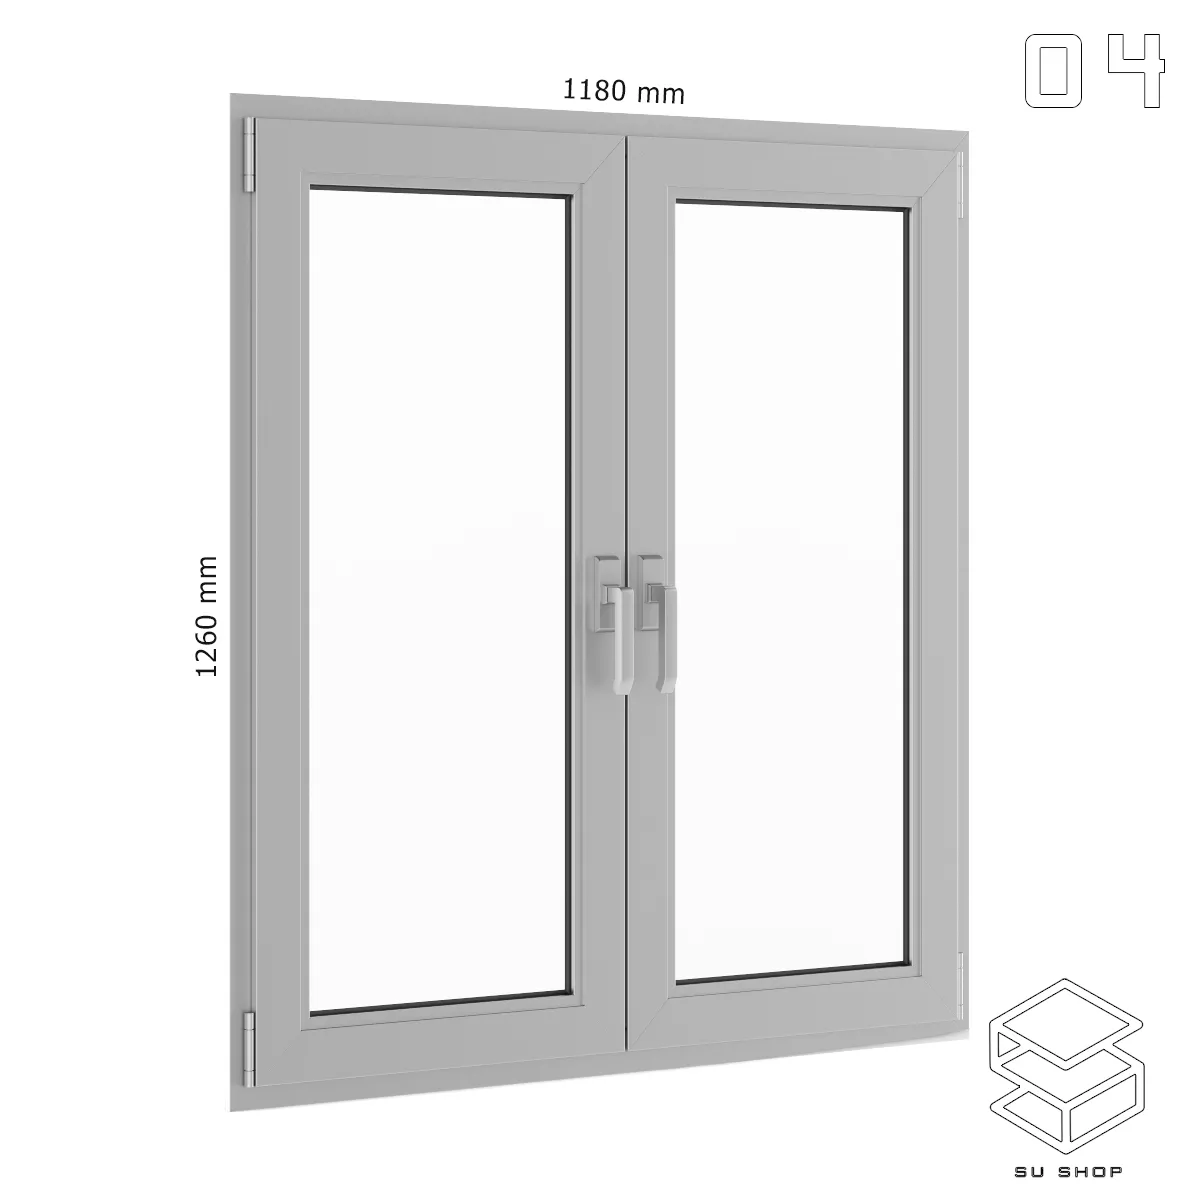 MODERN WINDOWS - SKETCHUP 3D MODEL - VRAY OR ENSCAPE - ID16781